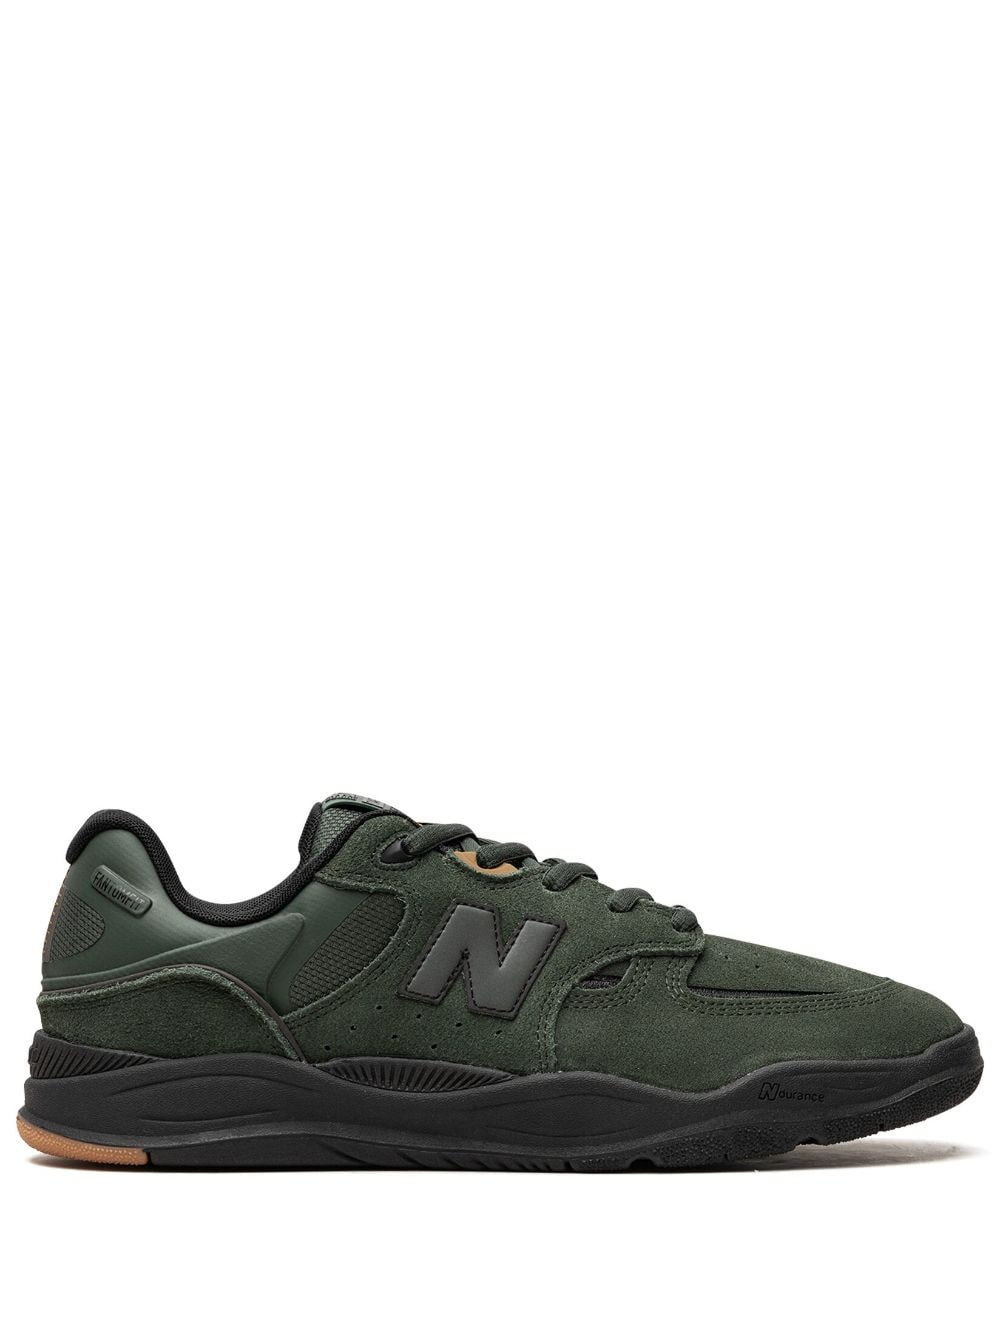 New Balance Numeric 1010 "Green / Black" sneakers